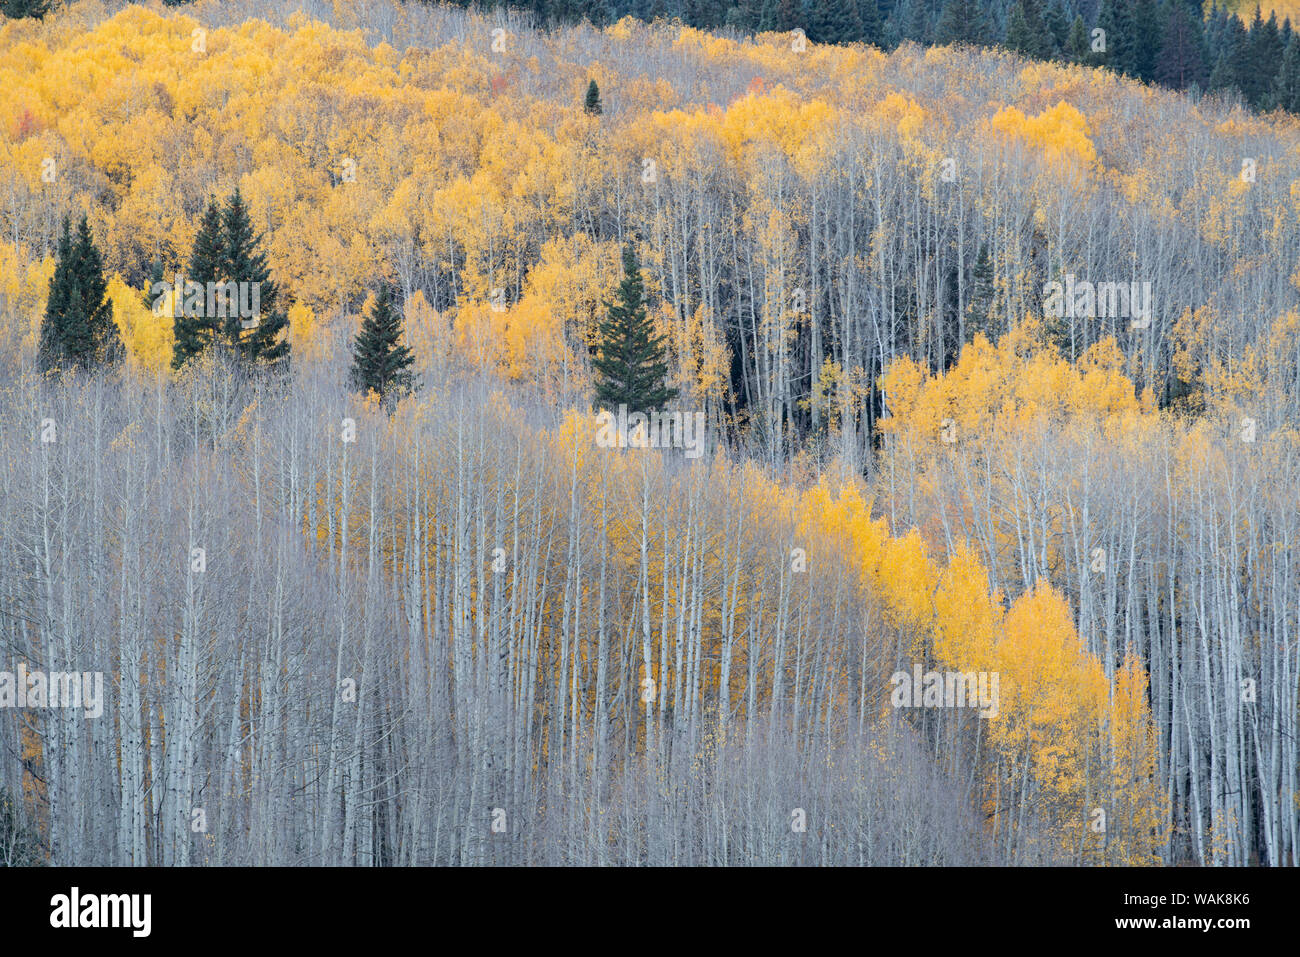 USA, Colorado, Gunnison National Forest. Tremble forêt en automne. En tant que crédit : Don Grall / Jaynes Gallery / DanitaDelimont.com Banque D'Images